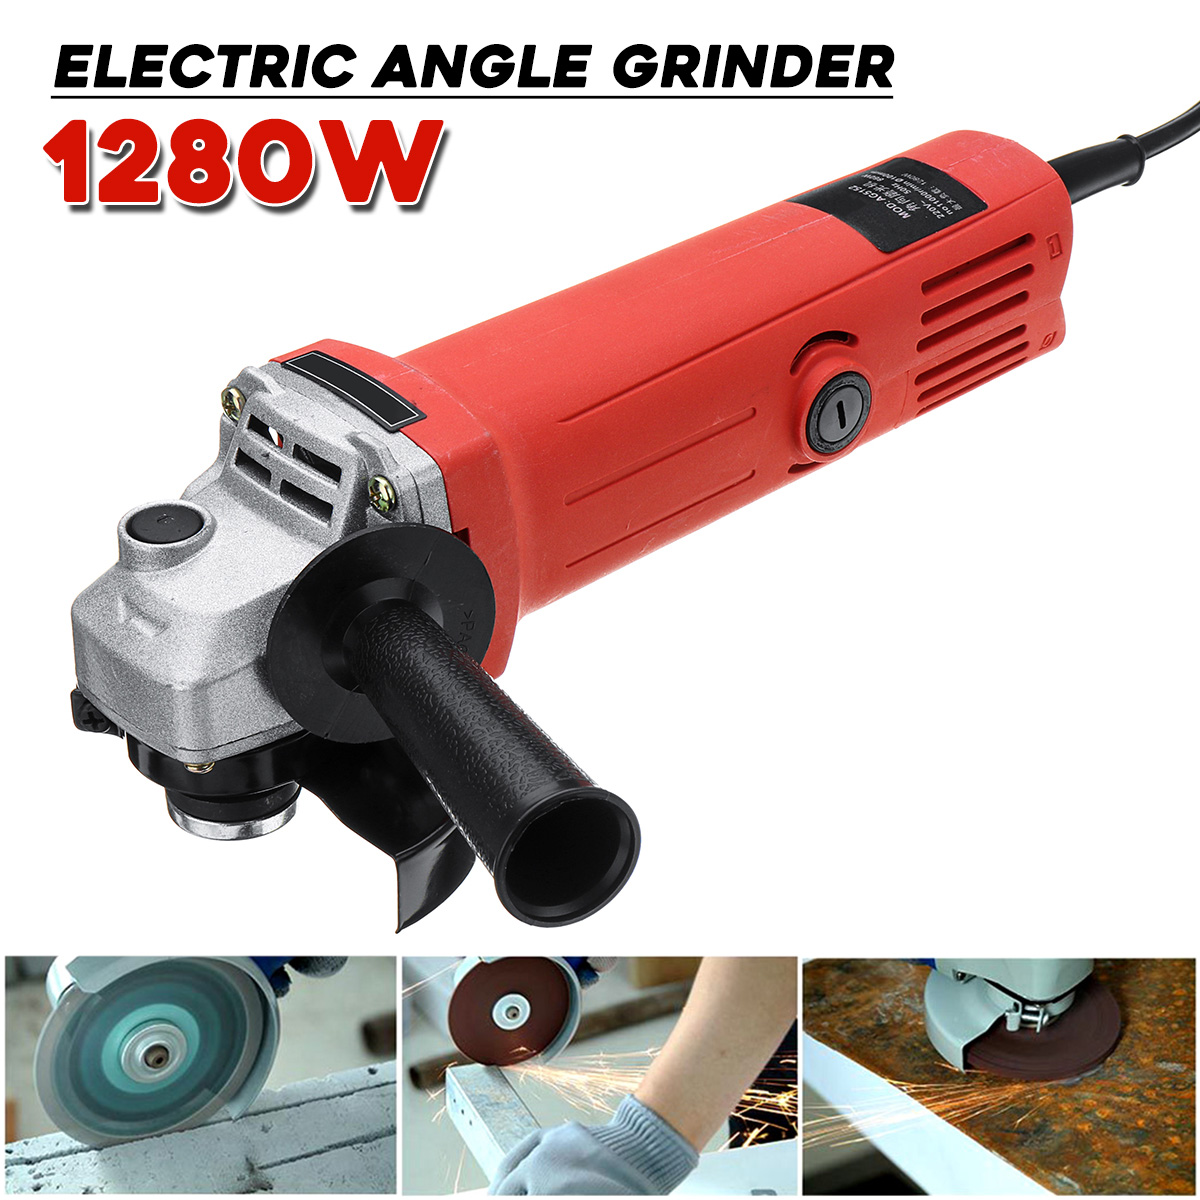 1280W-Electric-Angle-Grinder-Metal-Wood-Cutting-Machine-Polishing-Polisher-Grinding-Cutting-Tool-1525567-2